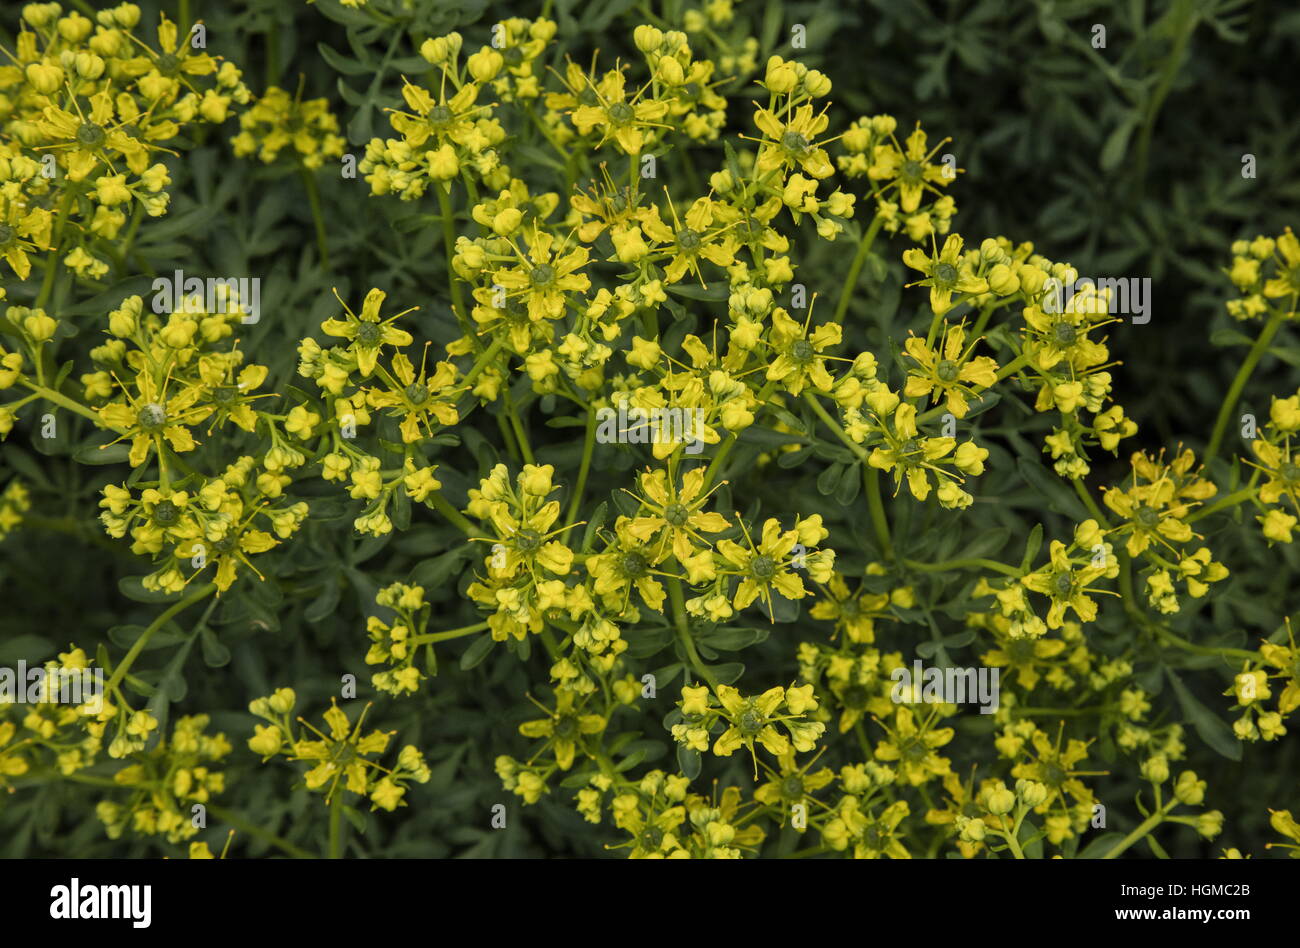 Common rue or herb-of-grace, Ruta graveolens in flower, as garden plant. Stock Photo